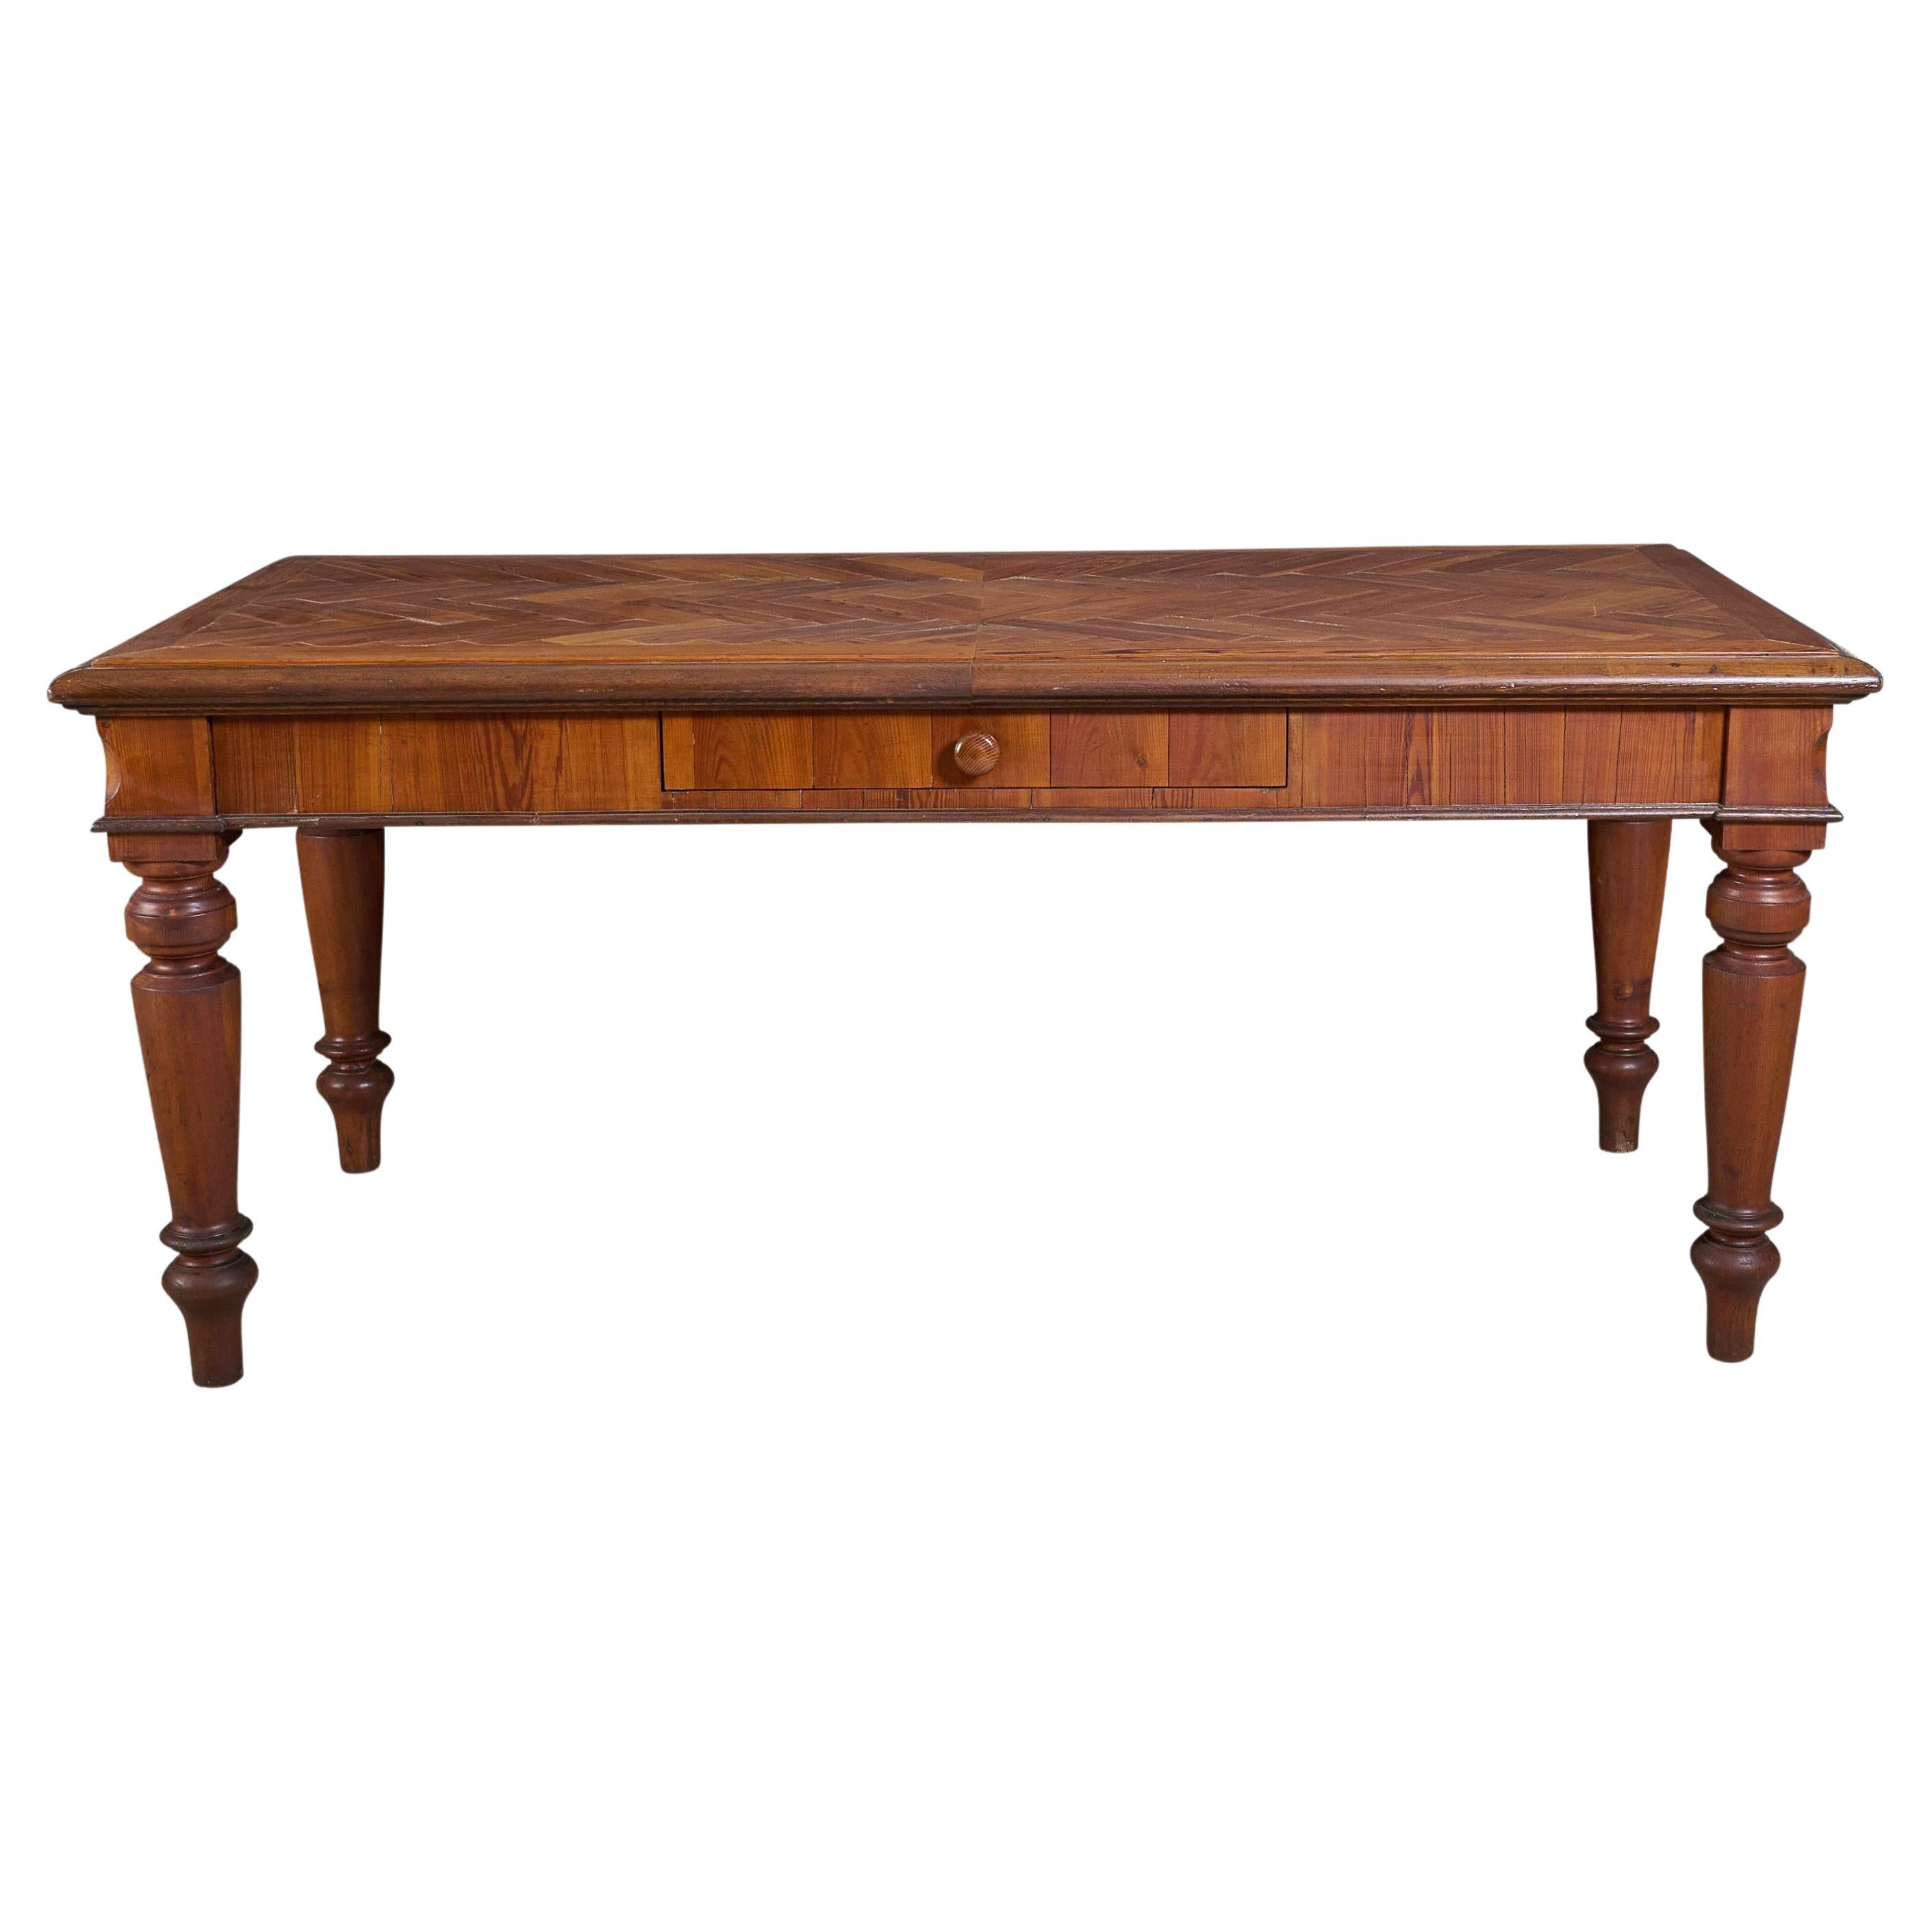 Table/Desk with Herringbone Design For Sale